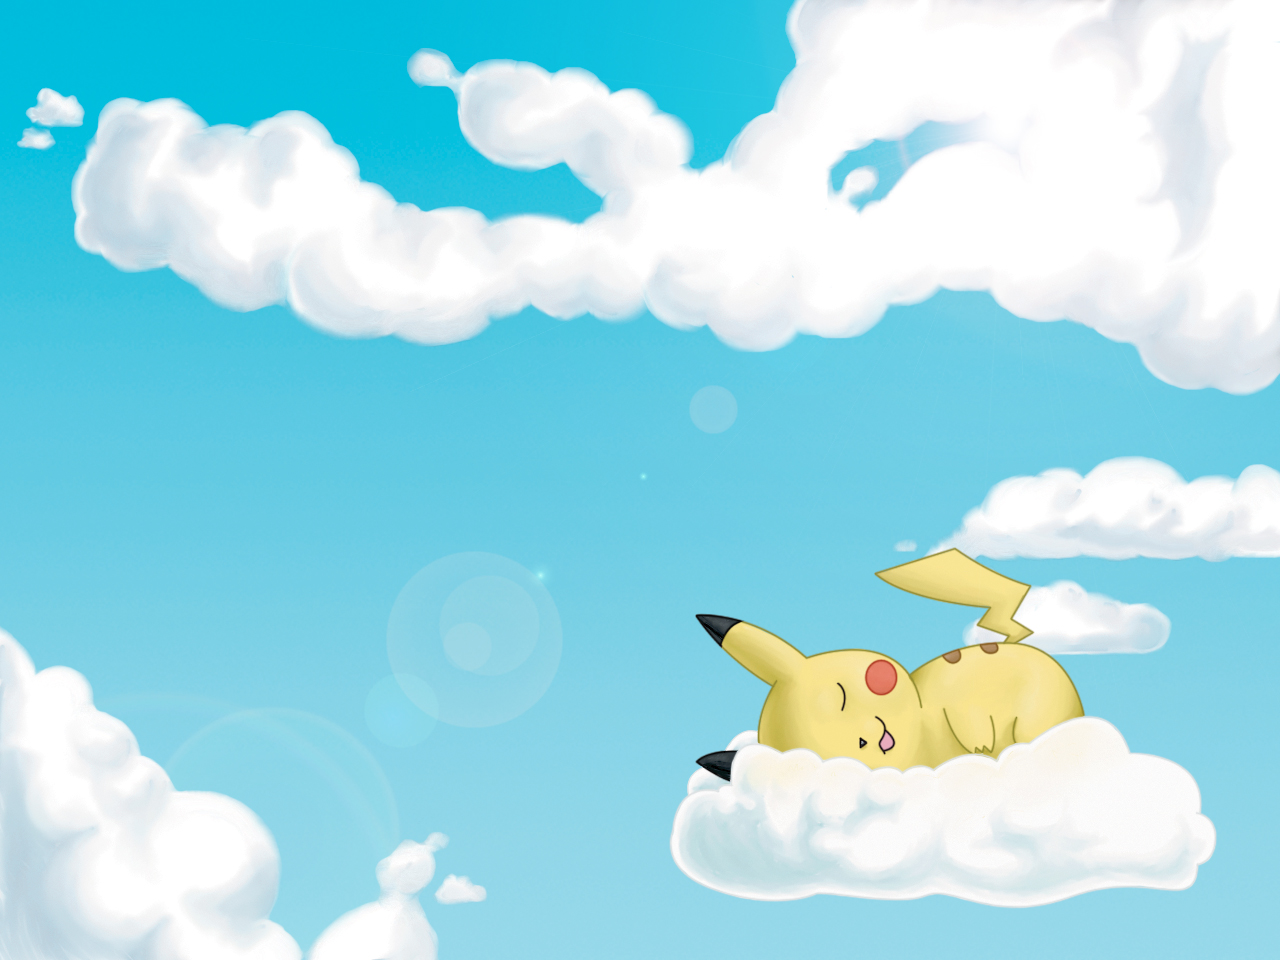 pikachu, pokémon, video game, cloud, sleeping wallpaper for mobile